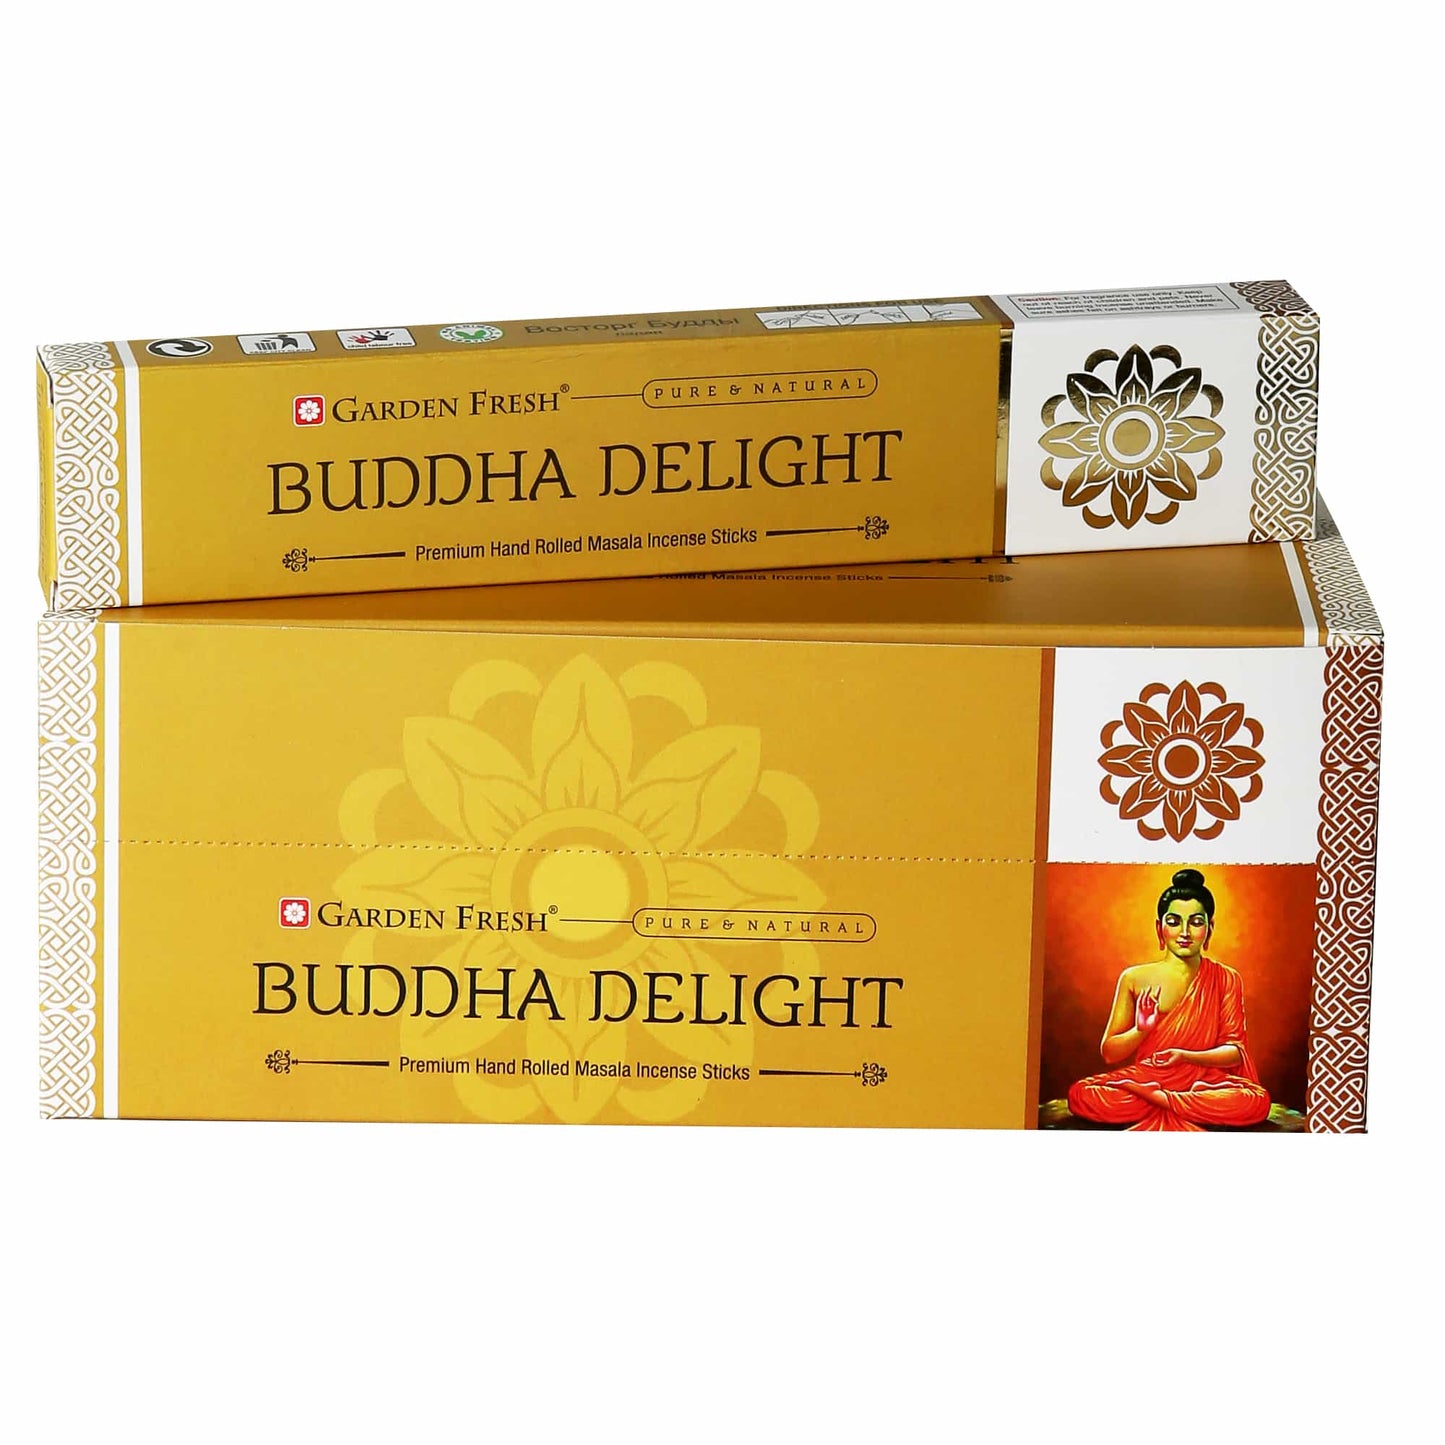 Buddha Delight masala incense sticks